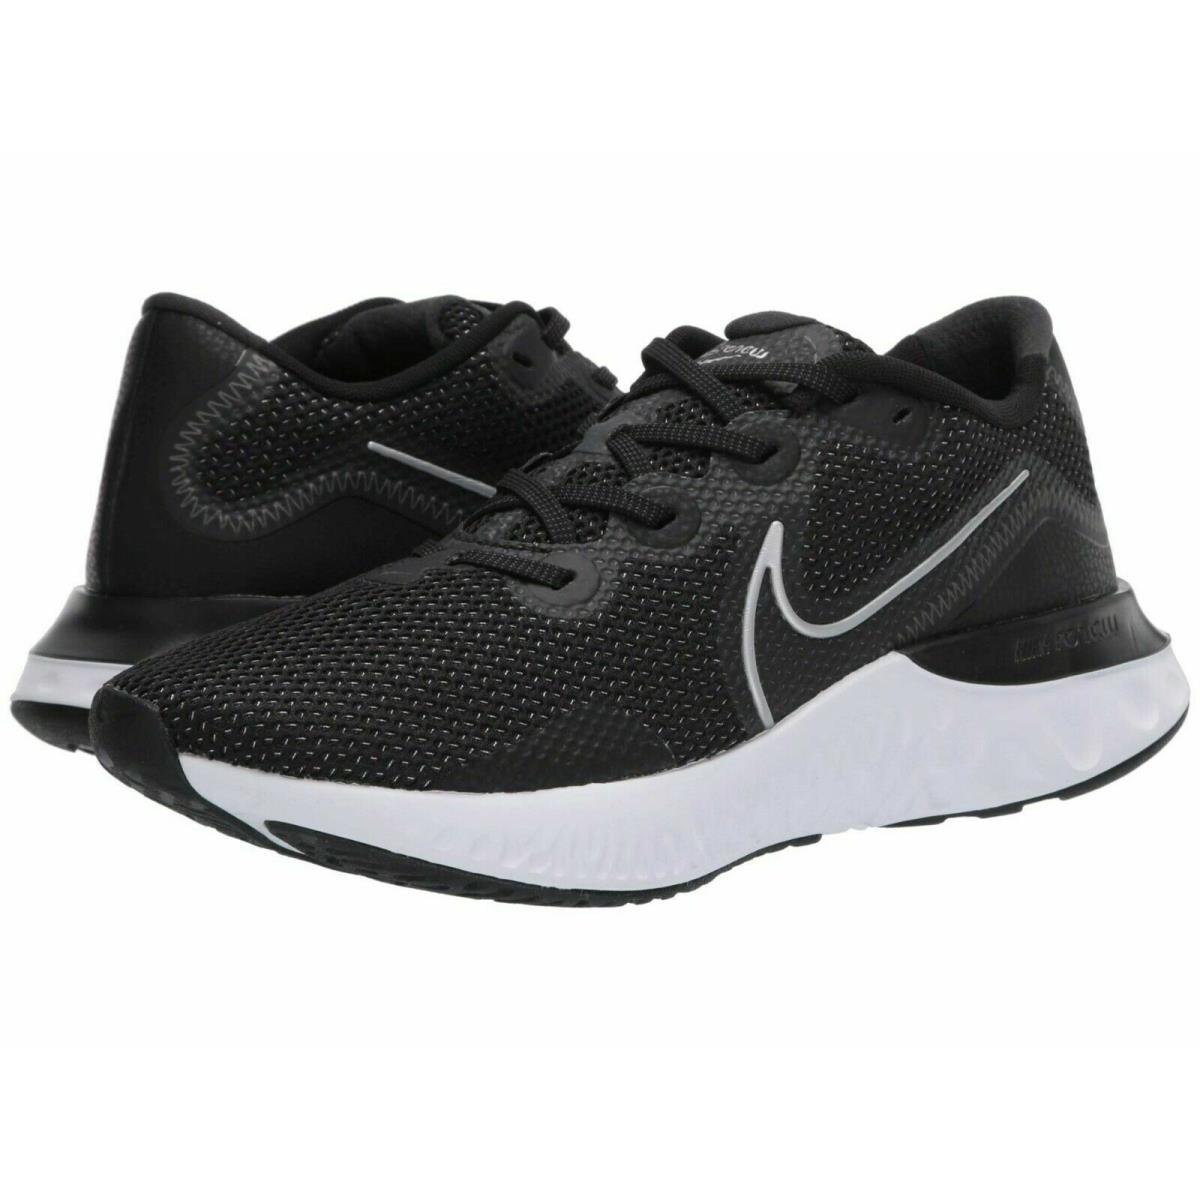 Men`s Nike Renew Run Running Shoes CK6357 002 Multiple Sizes Black/silver/white - Black/Metallic Silver/White